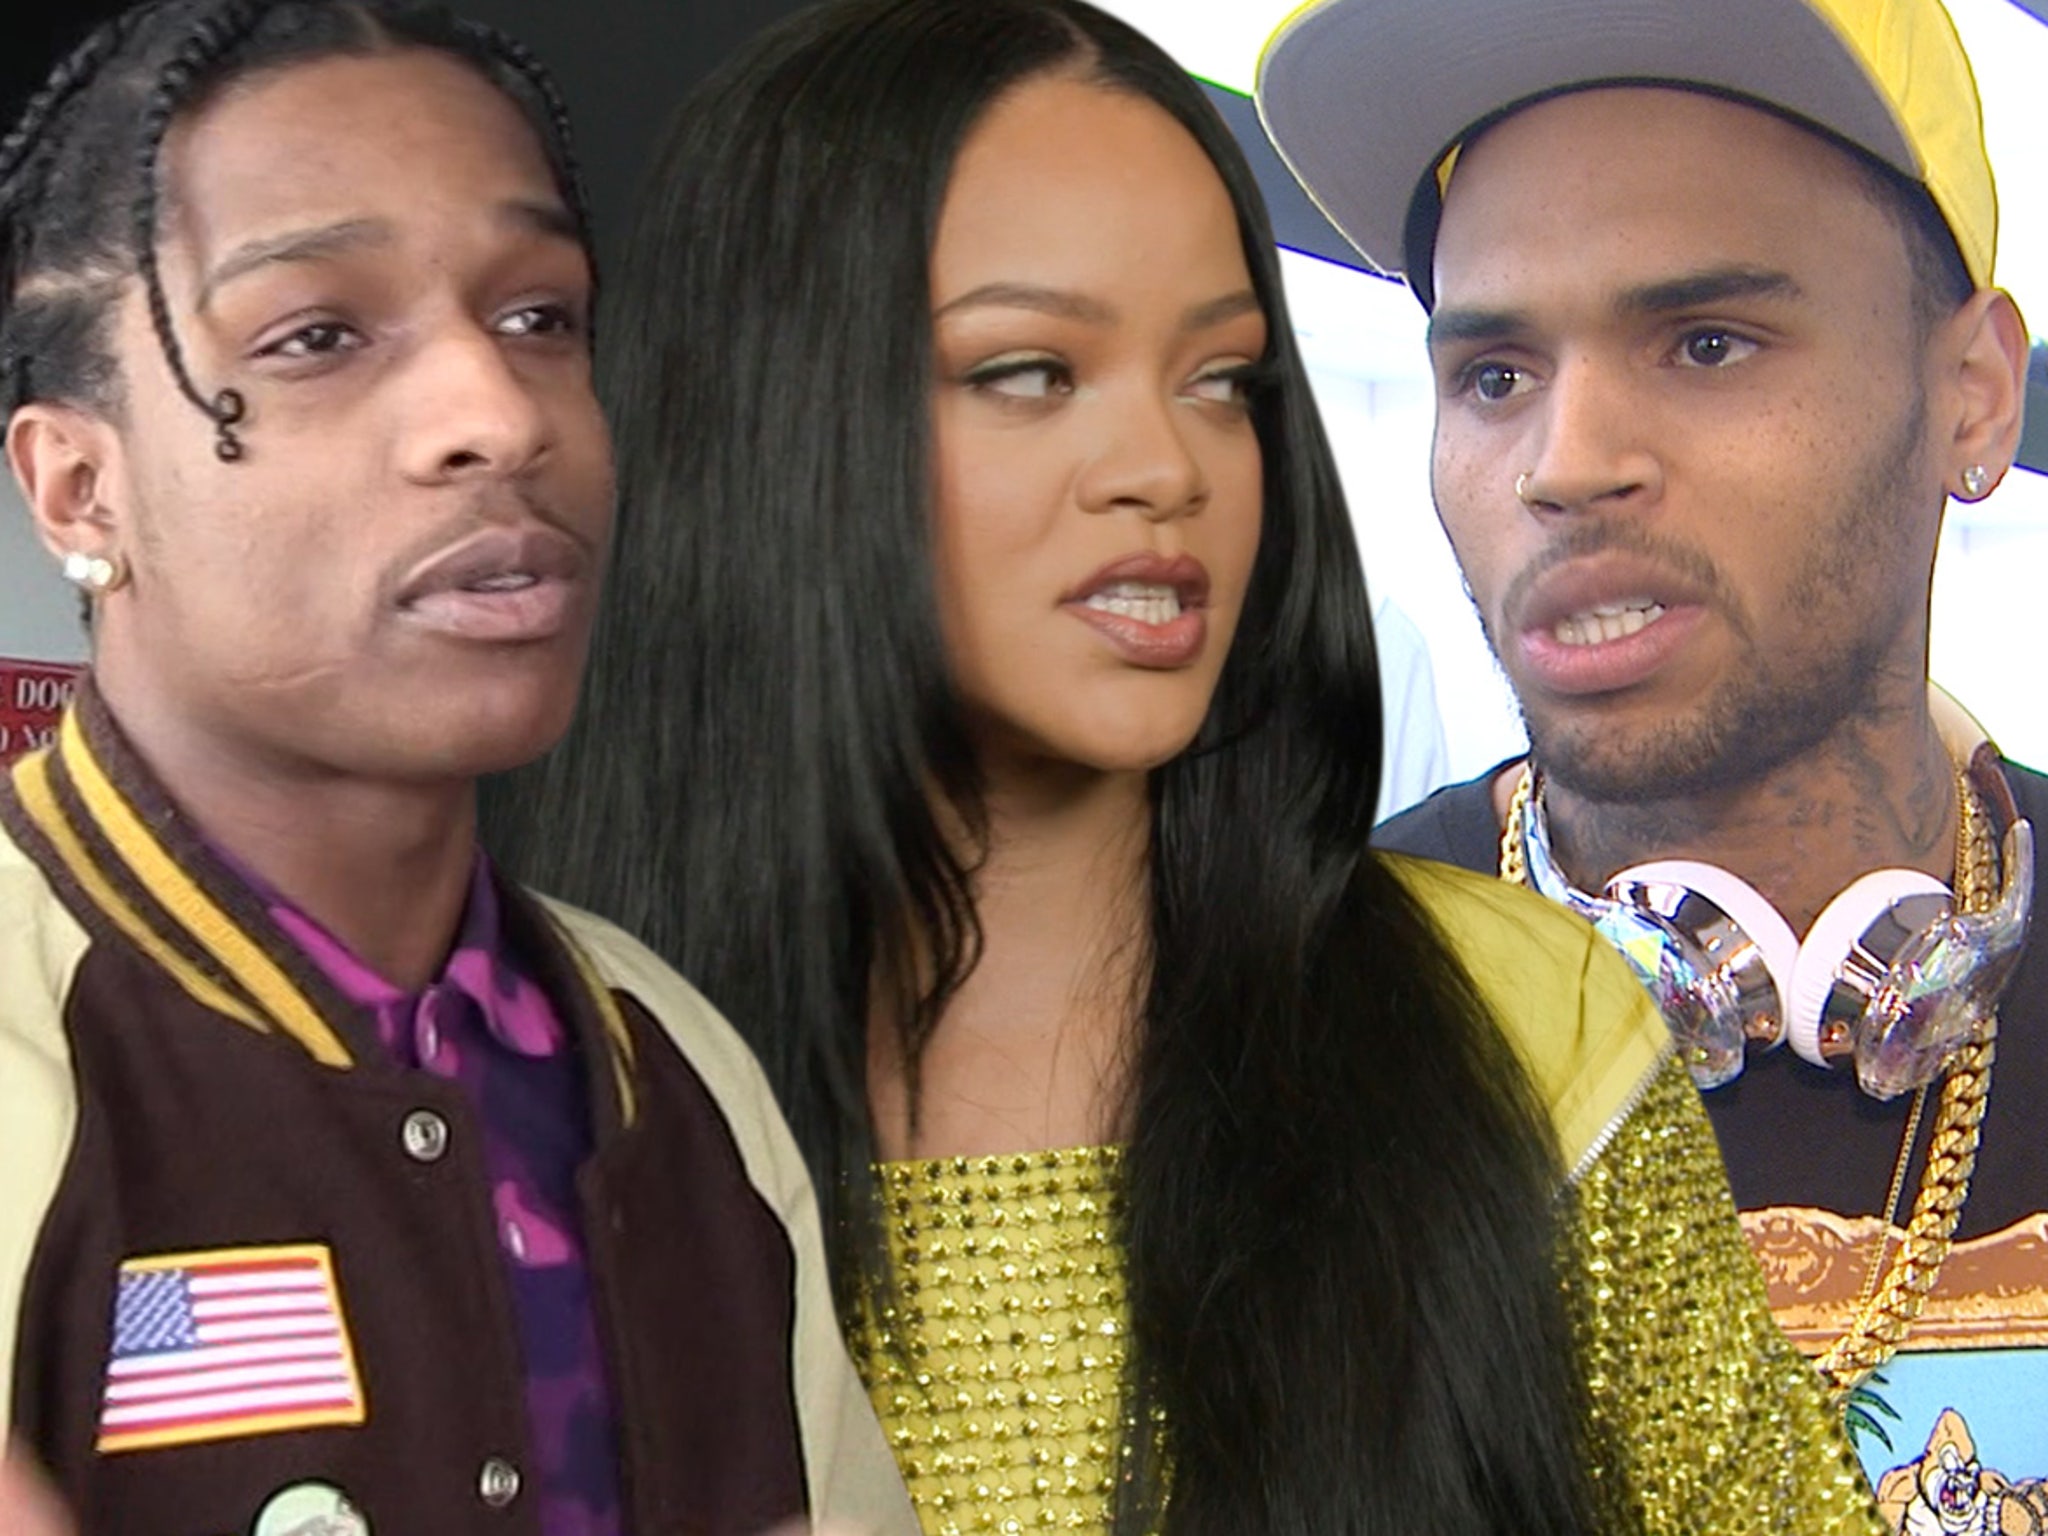 Anstændig Ikke moderigtigt gøre ondt A$AP Rocky Calls Out Chris Brown For Beating Rihanna in New Song